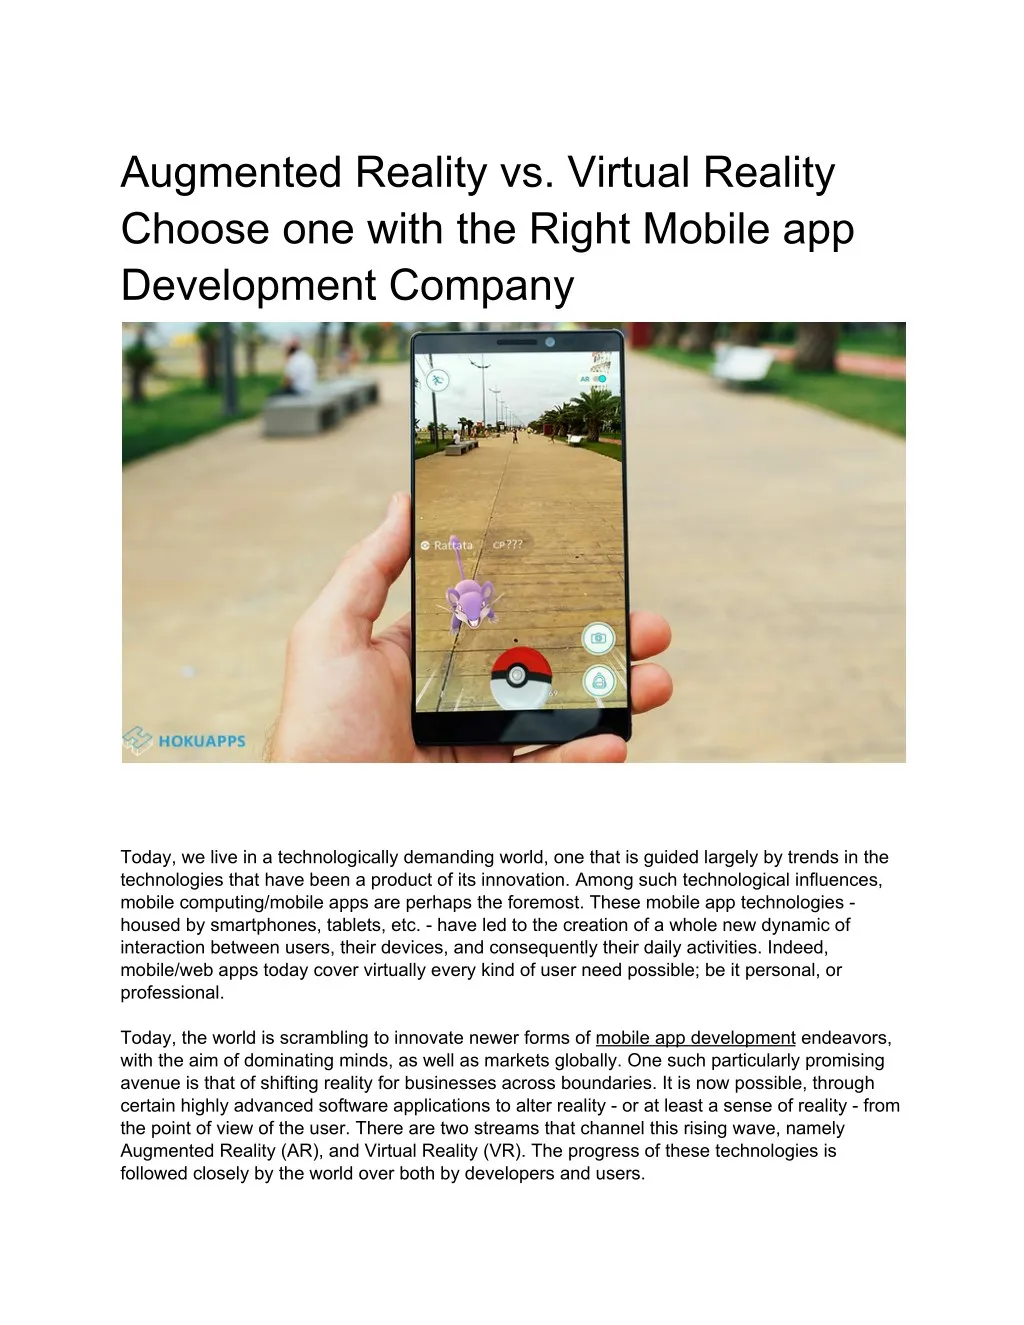 augmented reality vs virtual reality choose